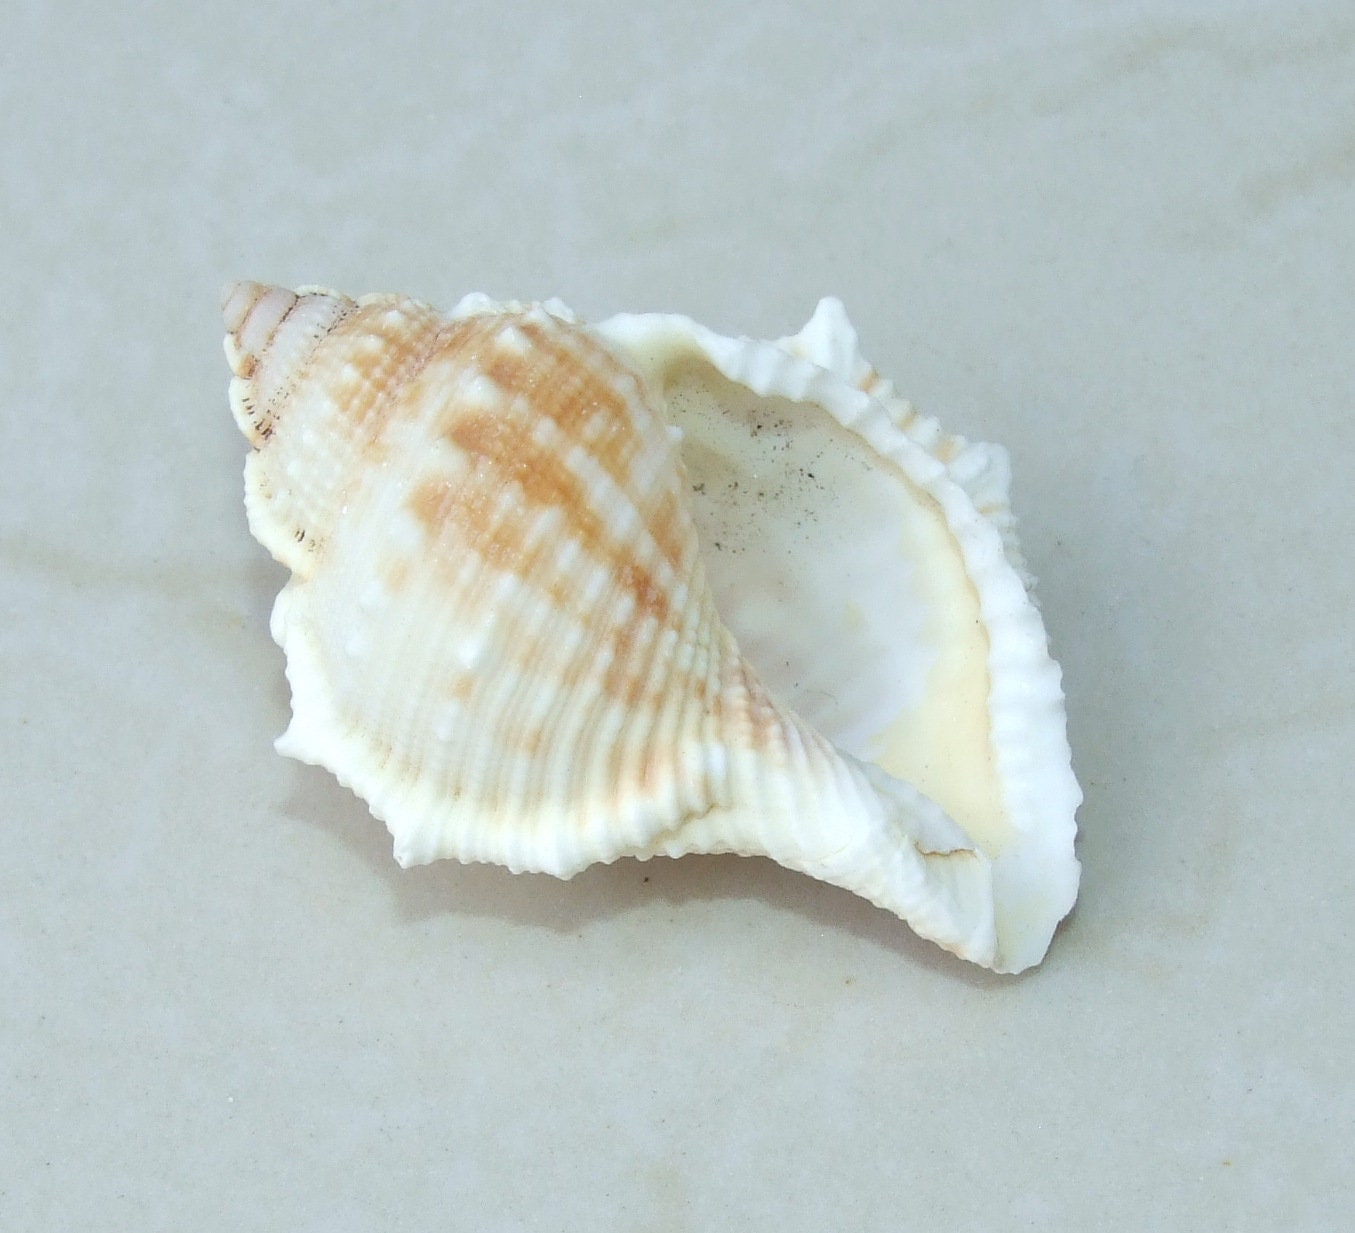 Margined Conch Seashells - Strombus Marginatus - (10 shells approx. 1.5-2  inches)